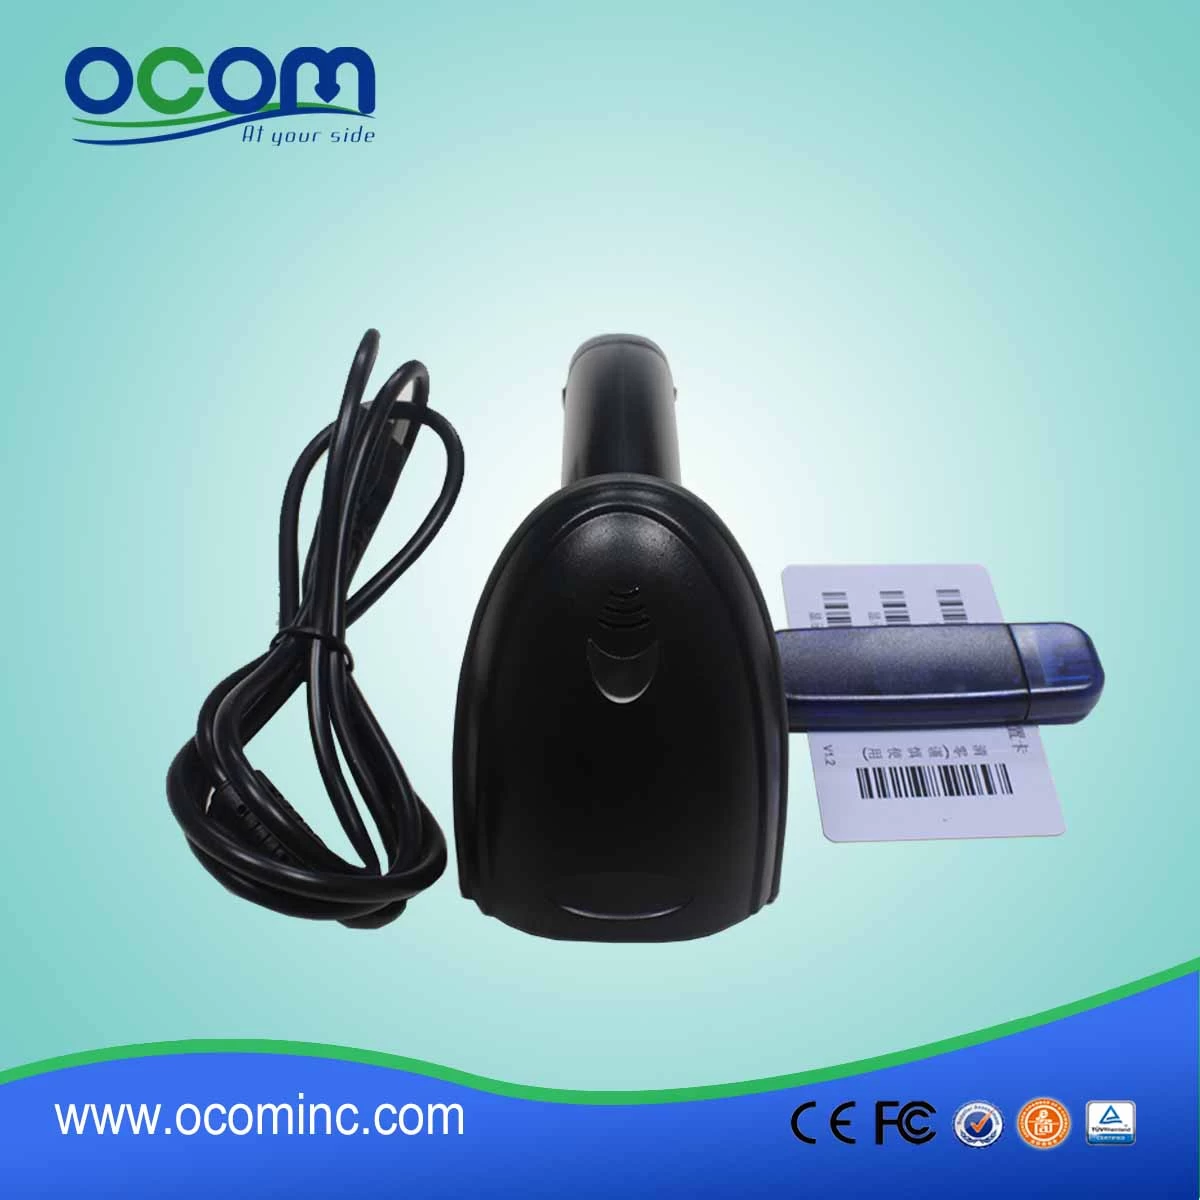 OCBS-LA11 Cheap Handheld USB Barcode Scanner